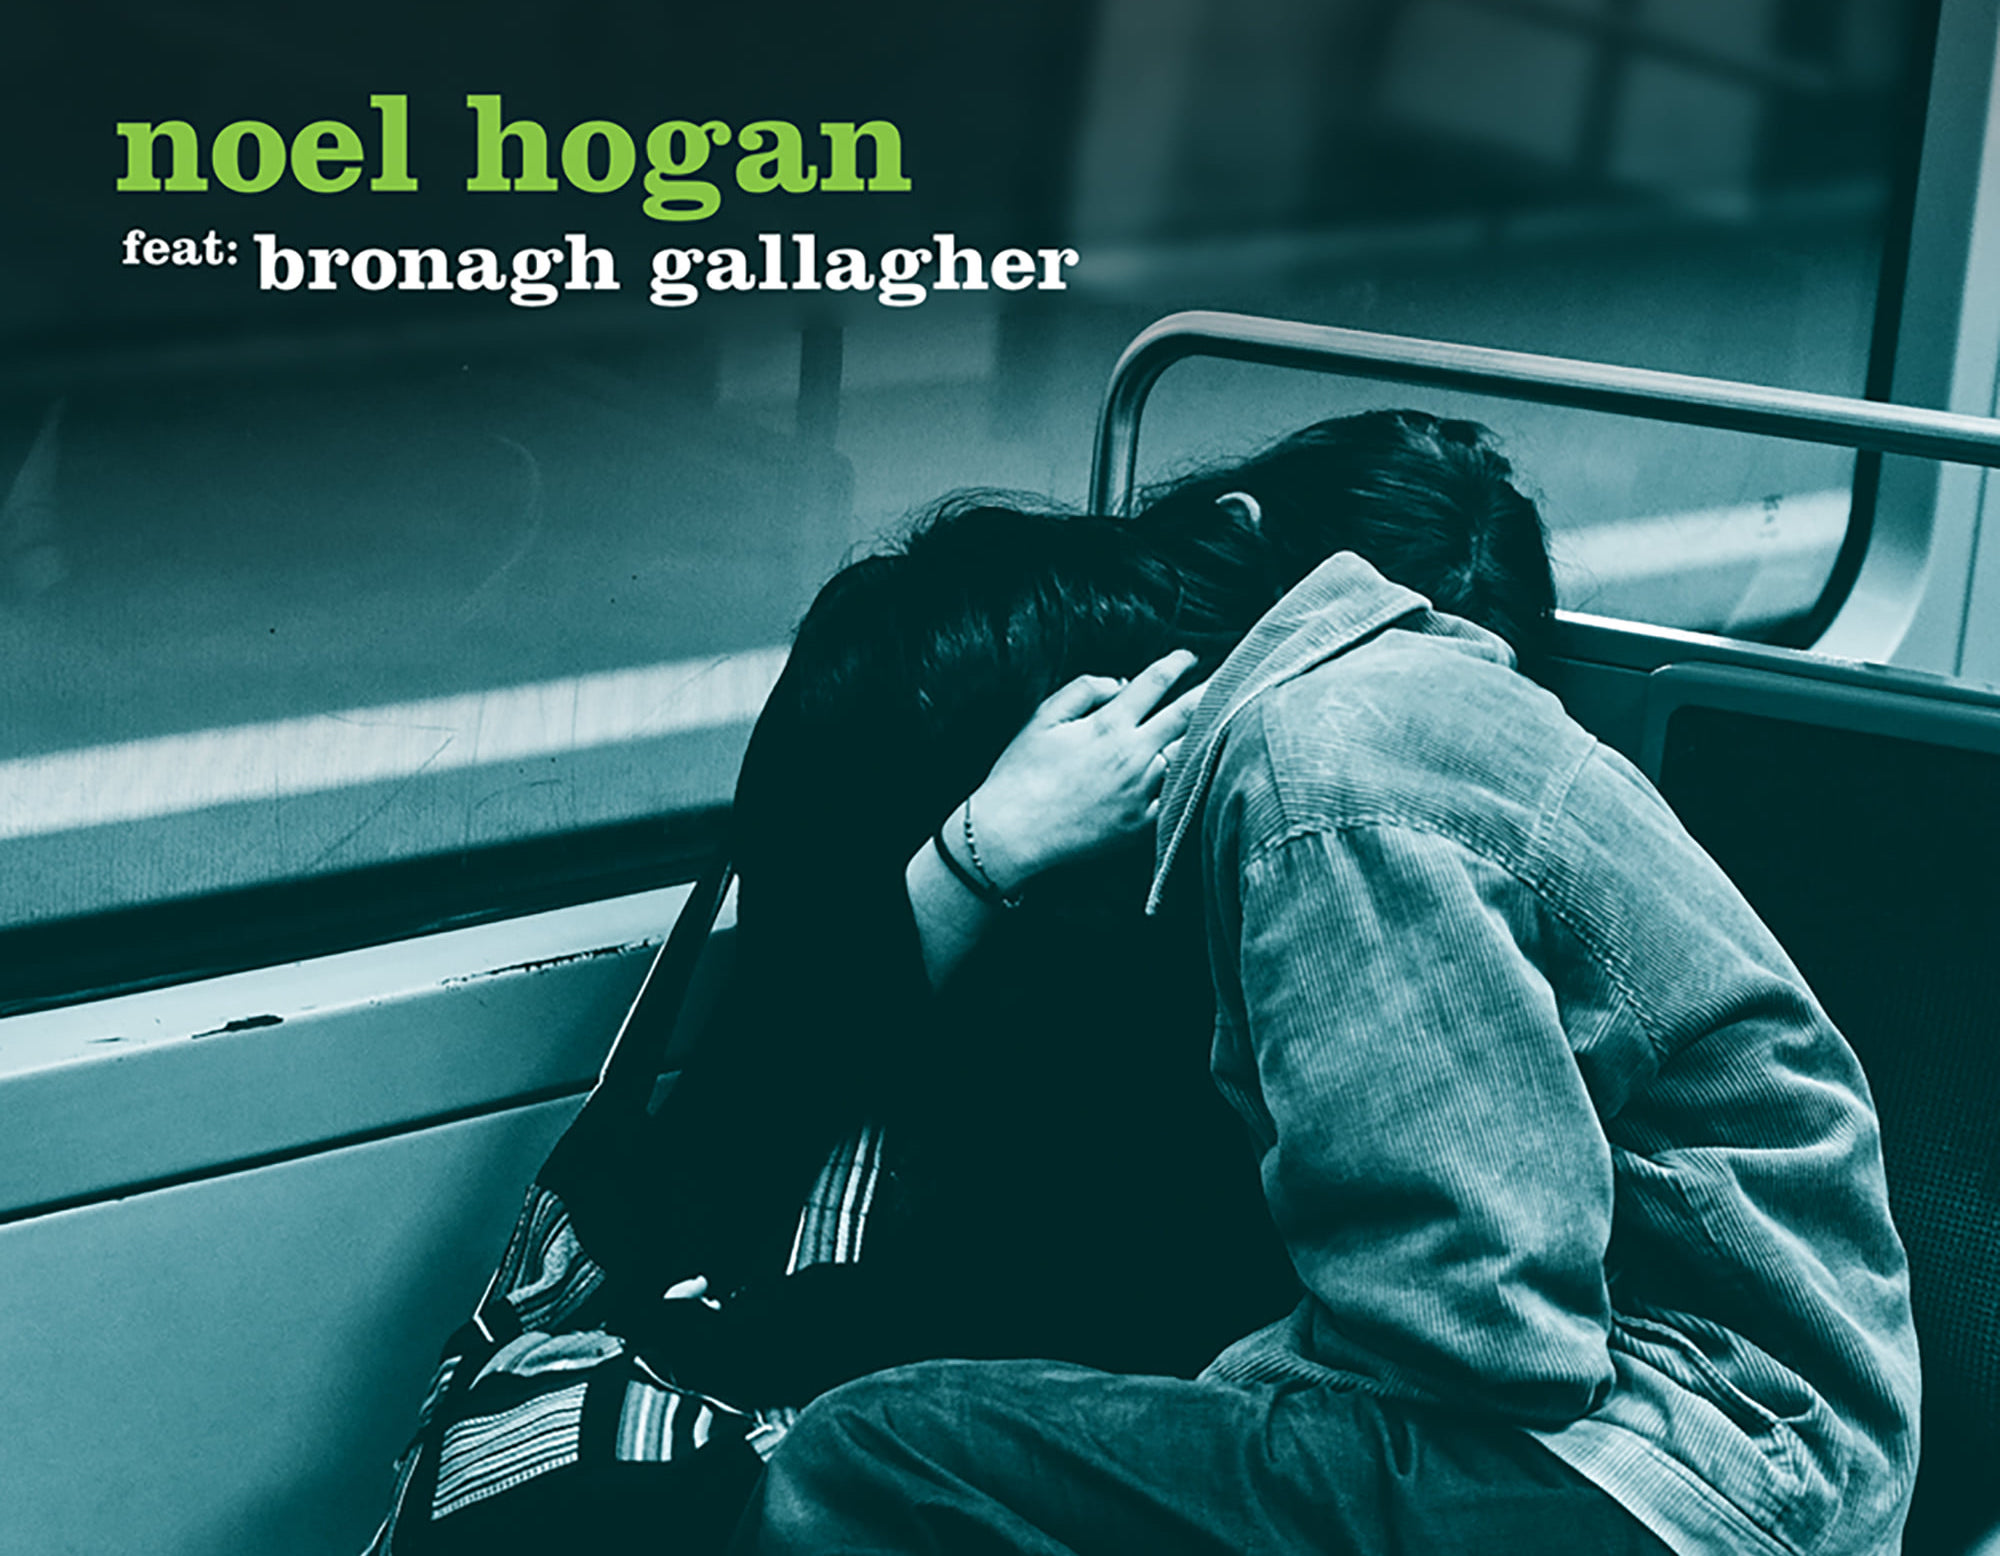 Noel Hogan and Bronagh Gallagher virtually produced their new single 'Crybaby'.